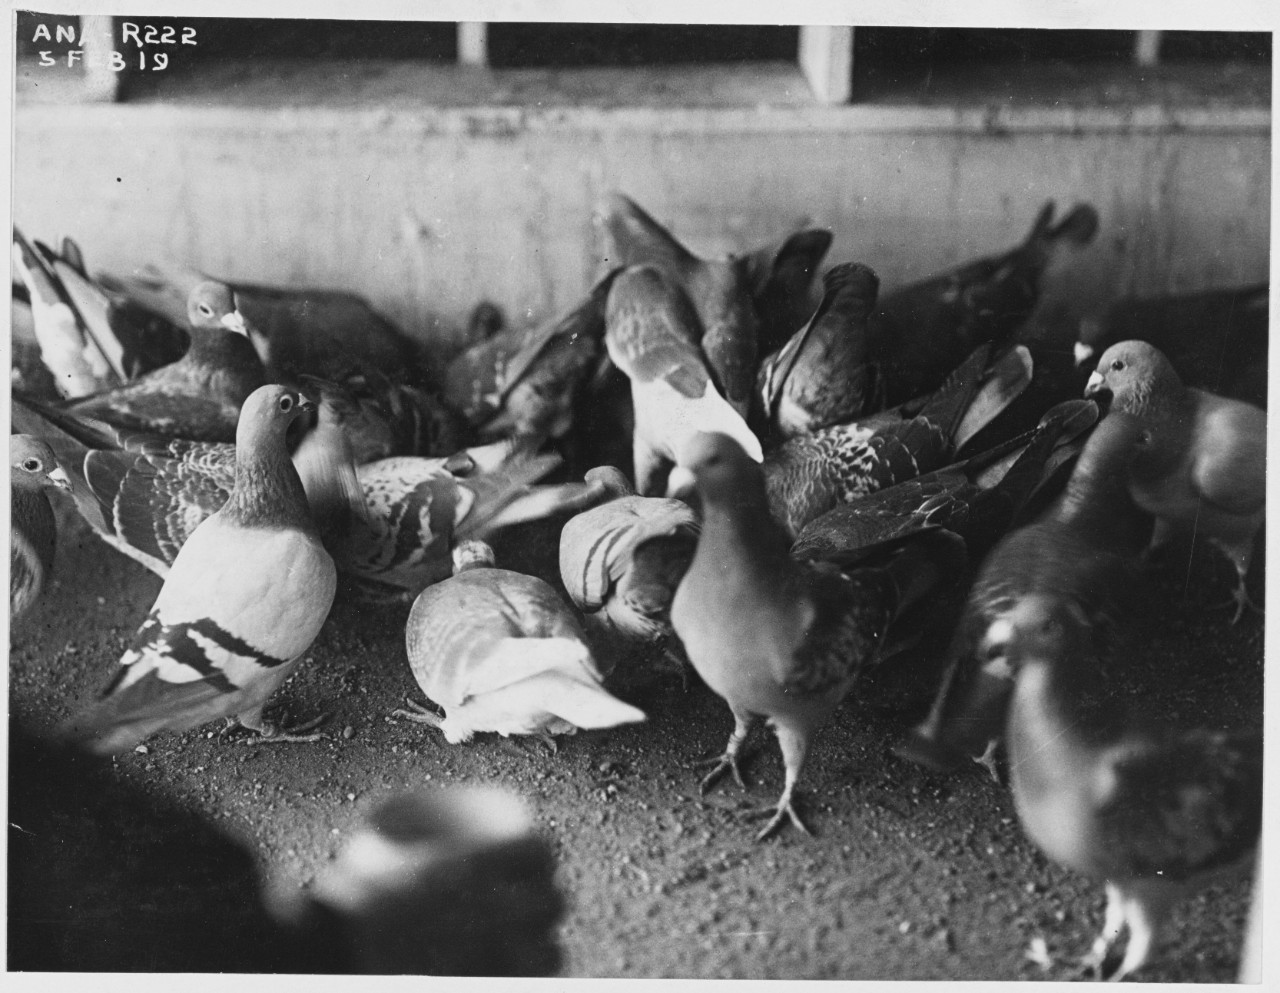 Group of overseas pigeons feeding (French birds). U.S. Naval Air Station, Anacostia, Washington, D.C. February 5, 1919.